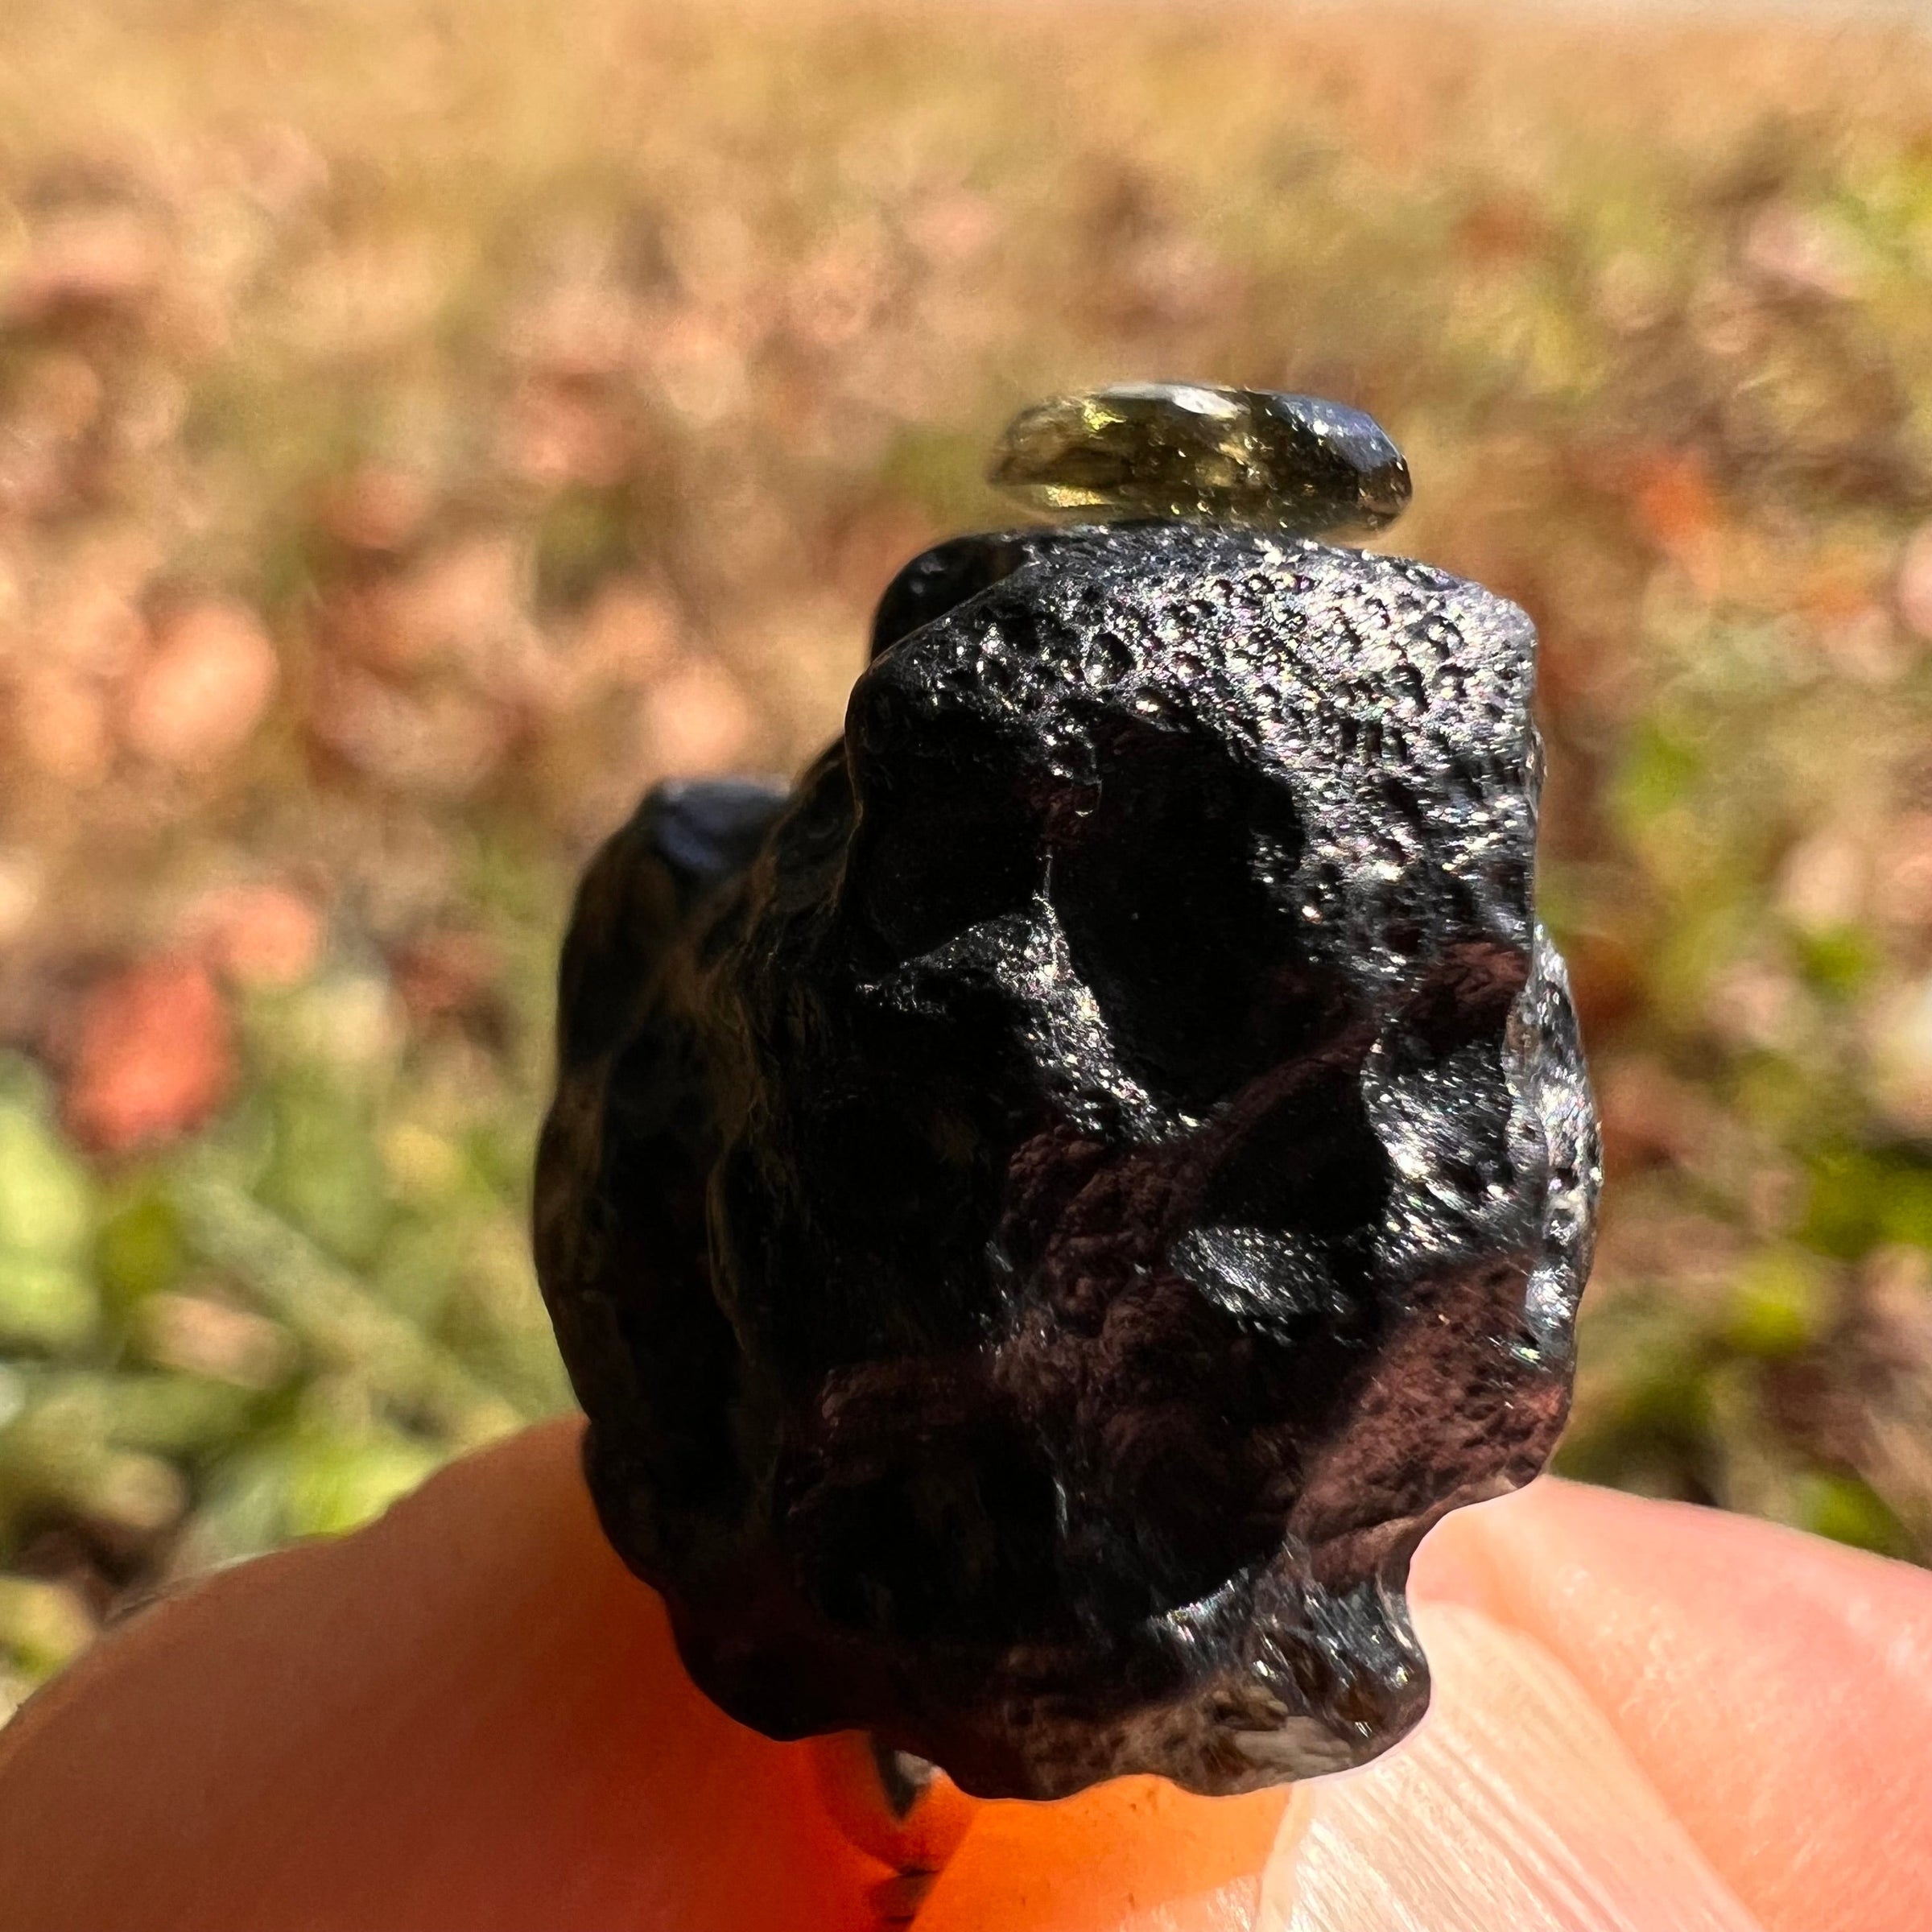 Propecy Stone, Indochinite, Moldavite Pendulum #2-Moldavite Life